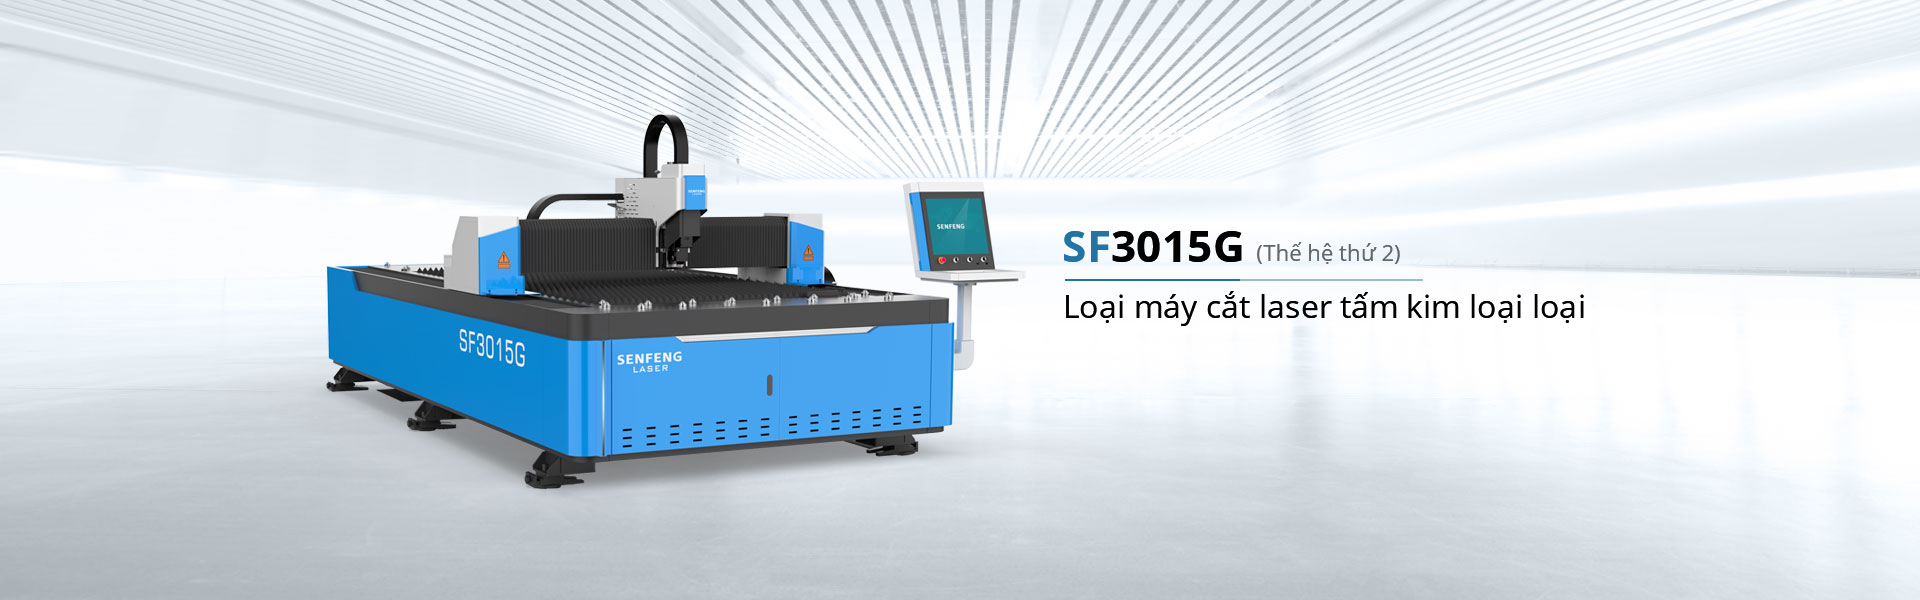 Máy cắt laser tấm kim loại mở SF3015G